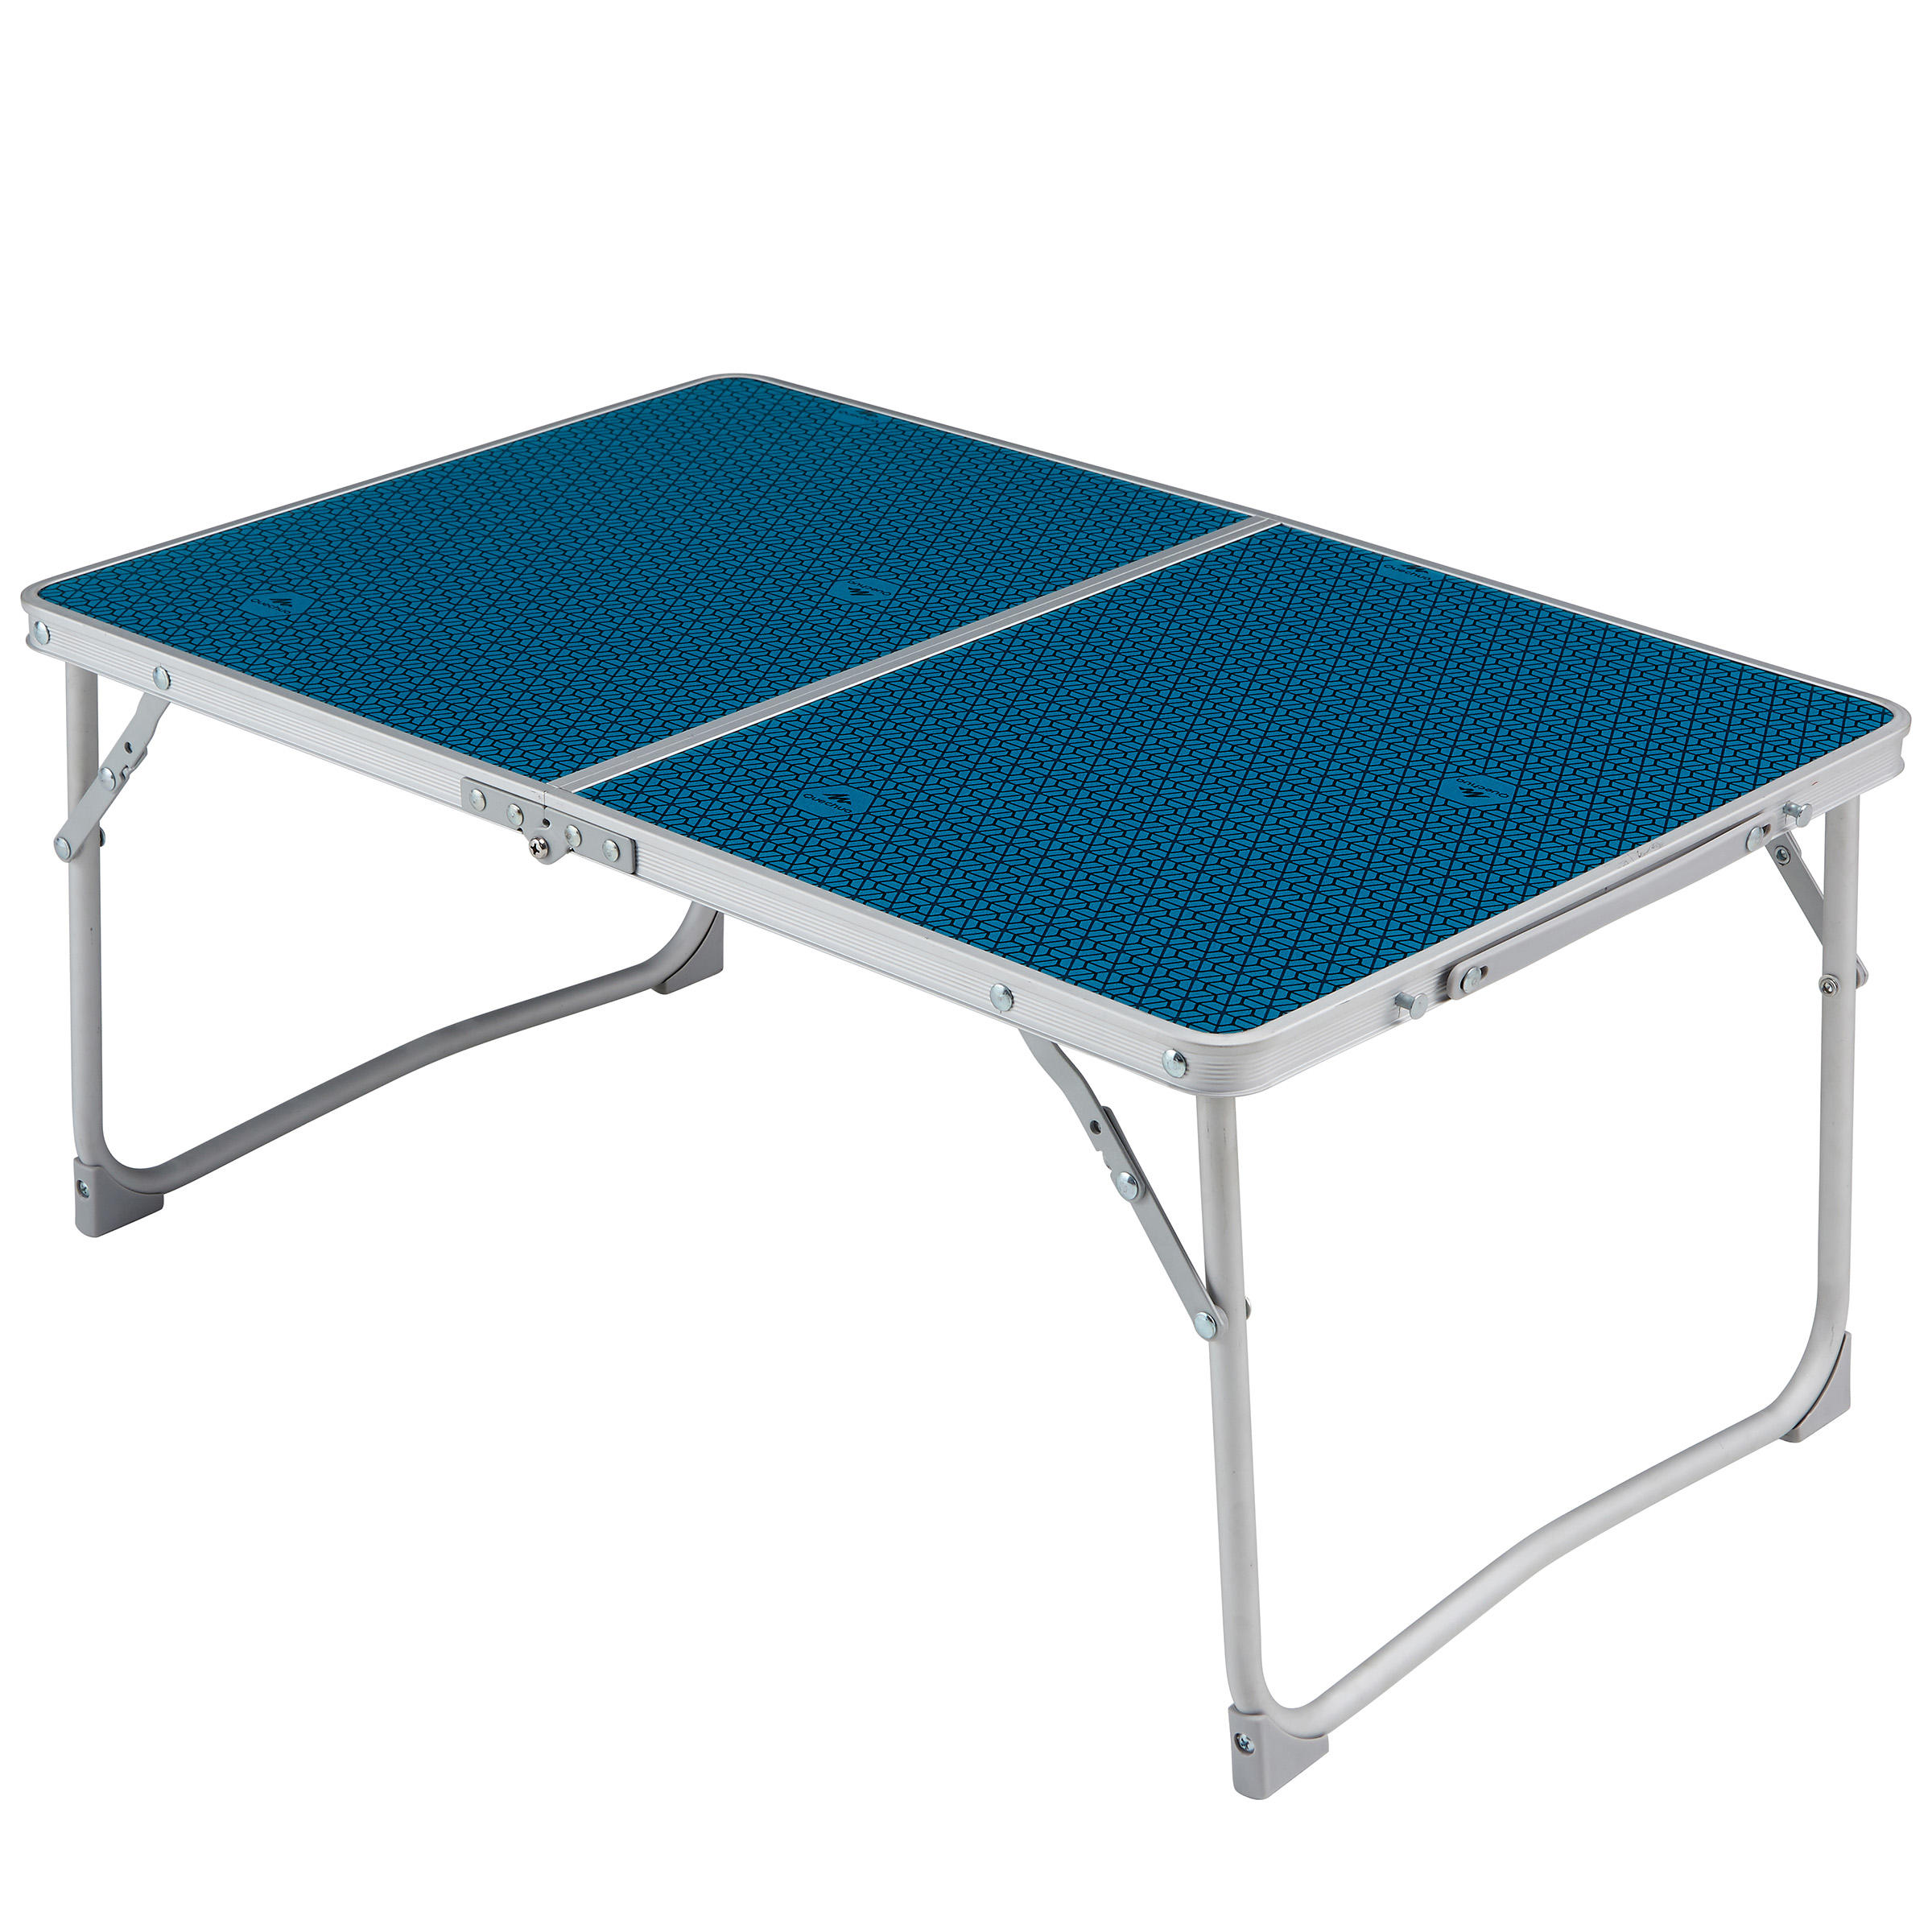 Tables - Folding Table \u0026 Coffee Table 